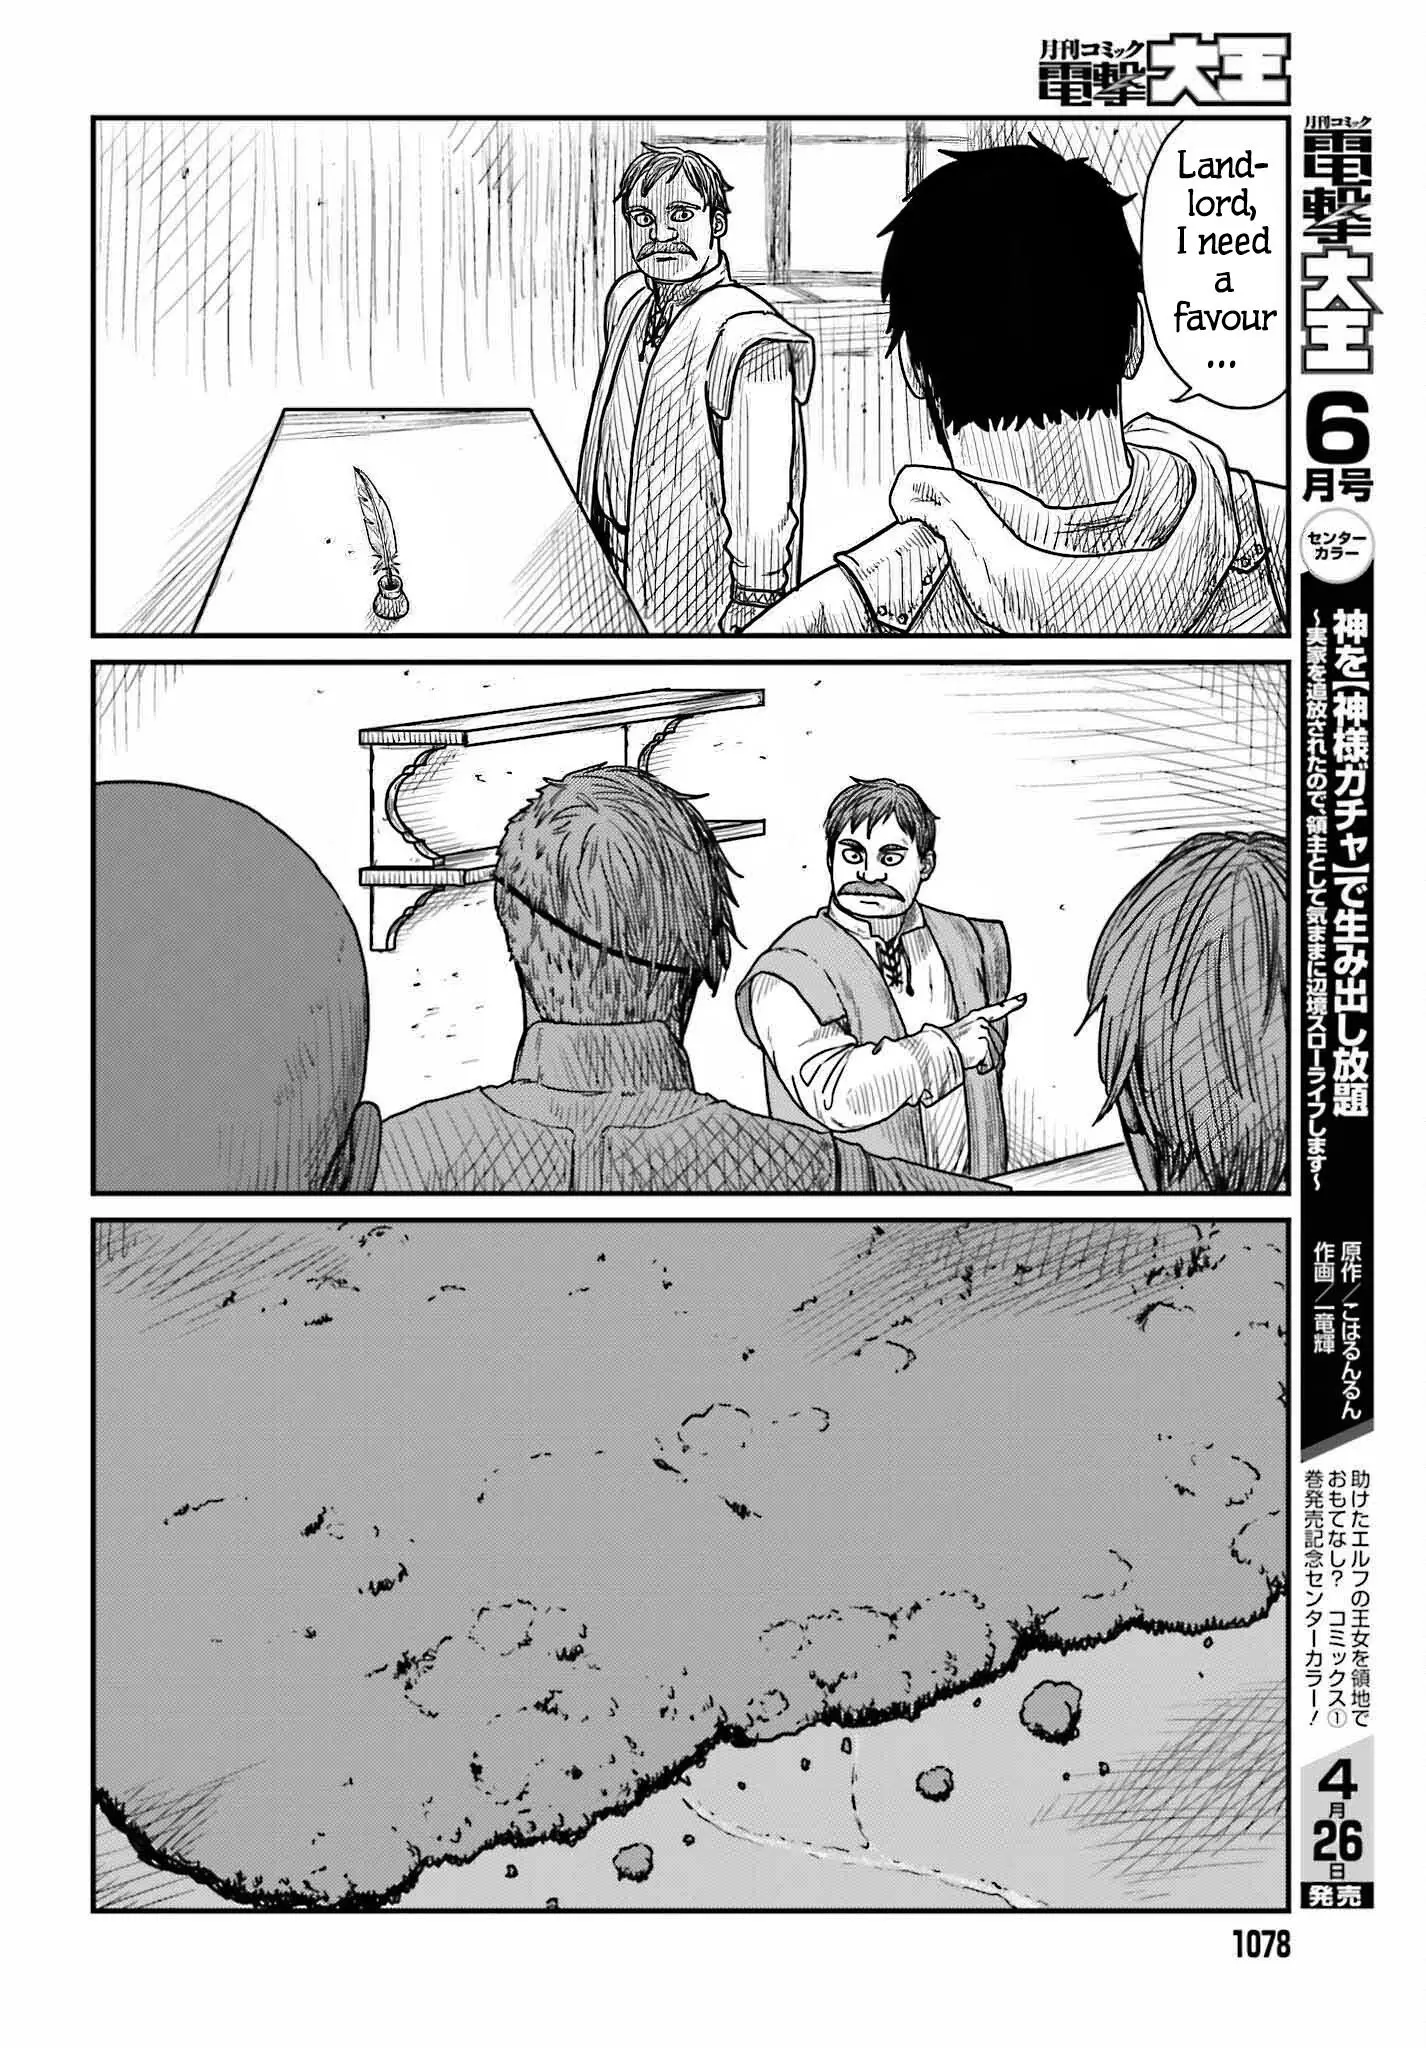 Yajin Tensei: Karate Survivor In Another World - 39 page 20-9385f7ea